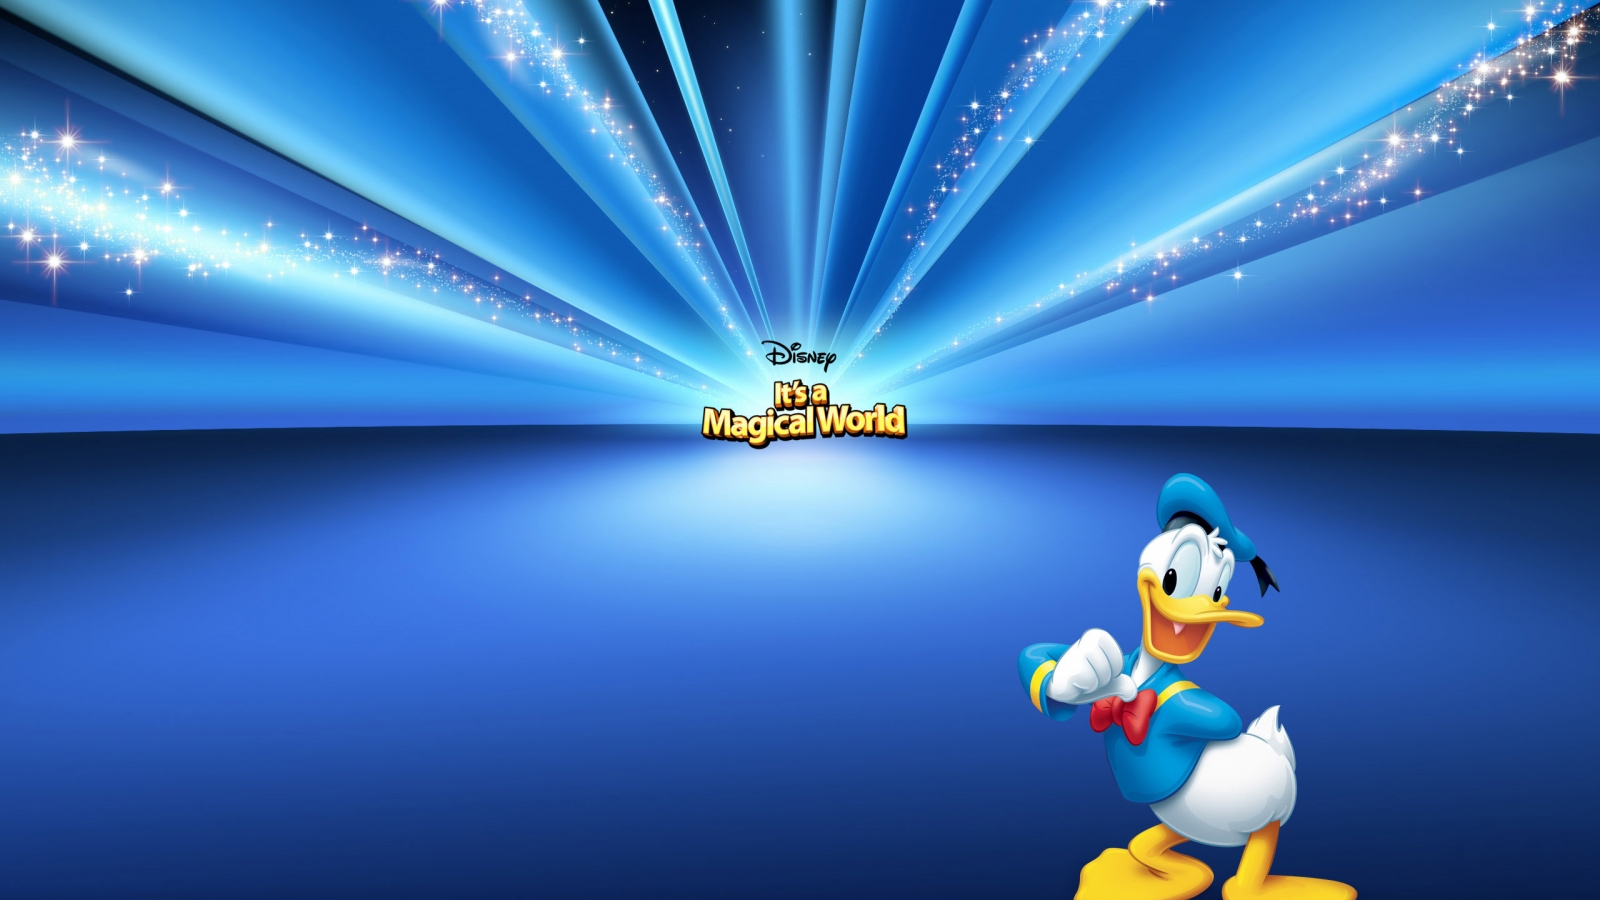 Donald Duck Cartoon for 1600 x 900 HDTV resolution